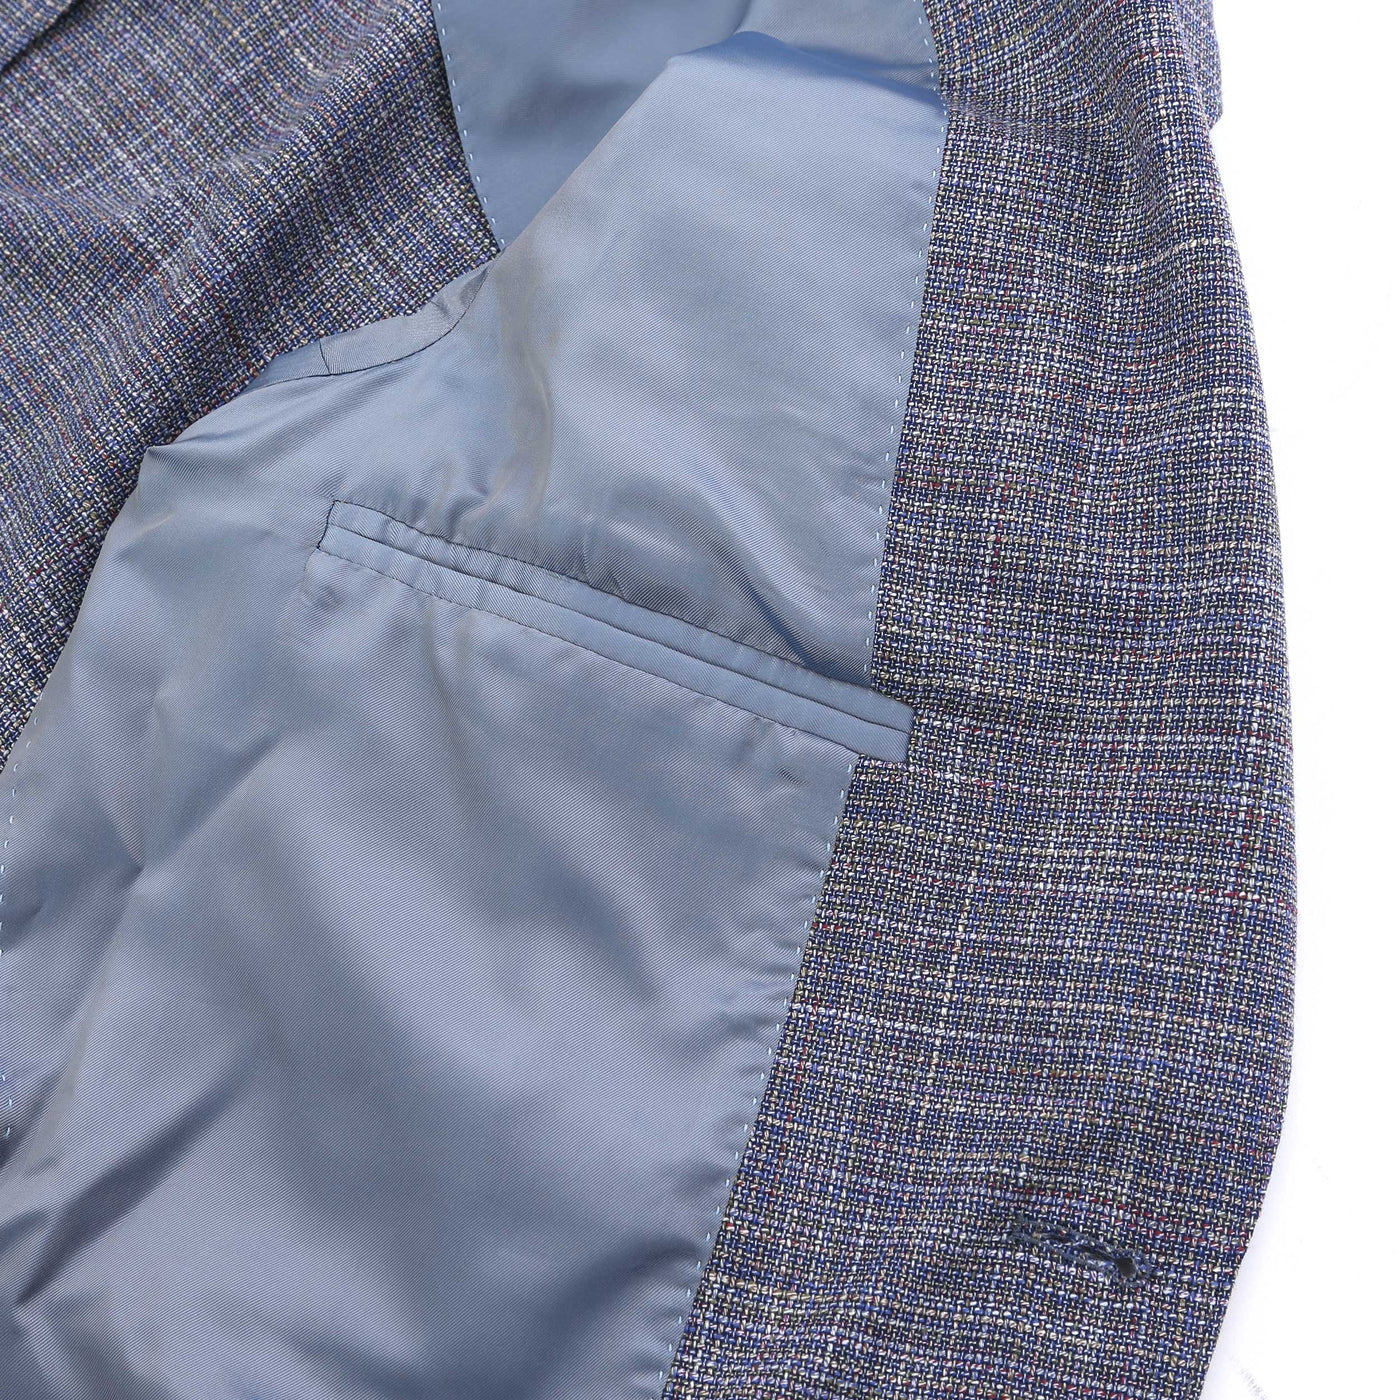 Pal Zileri Open Weave Blue Check Jacket in Blue Check Inside Pocket